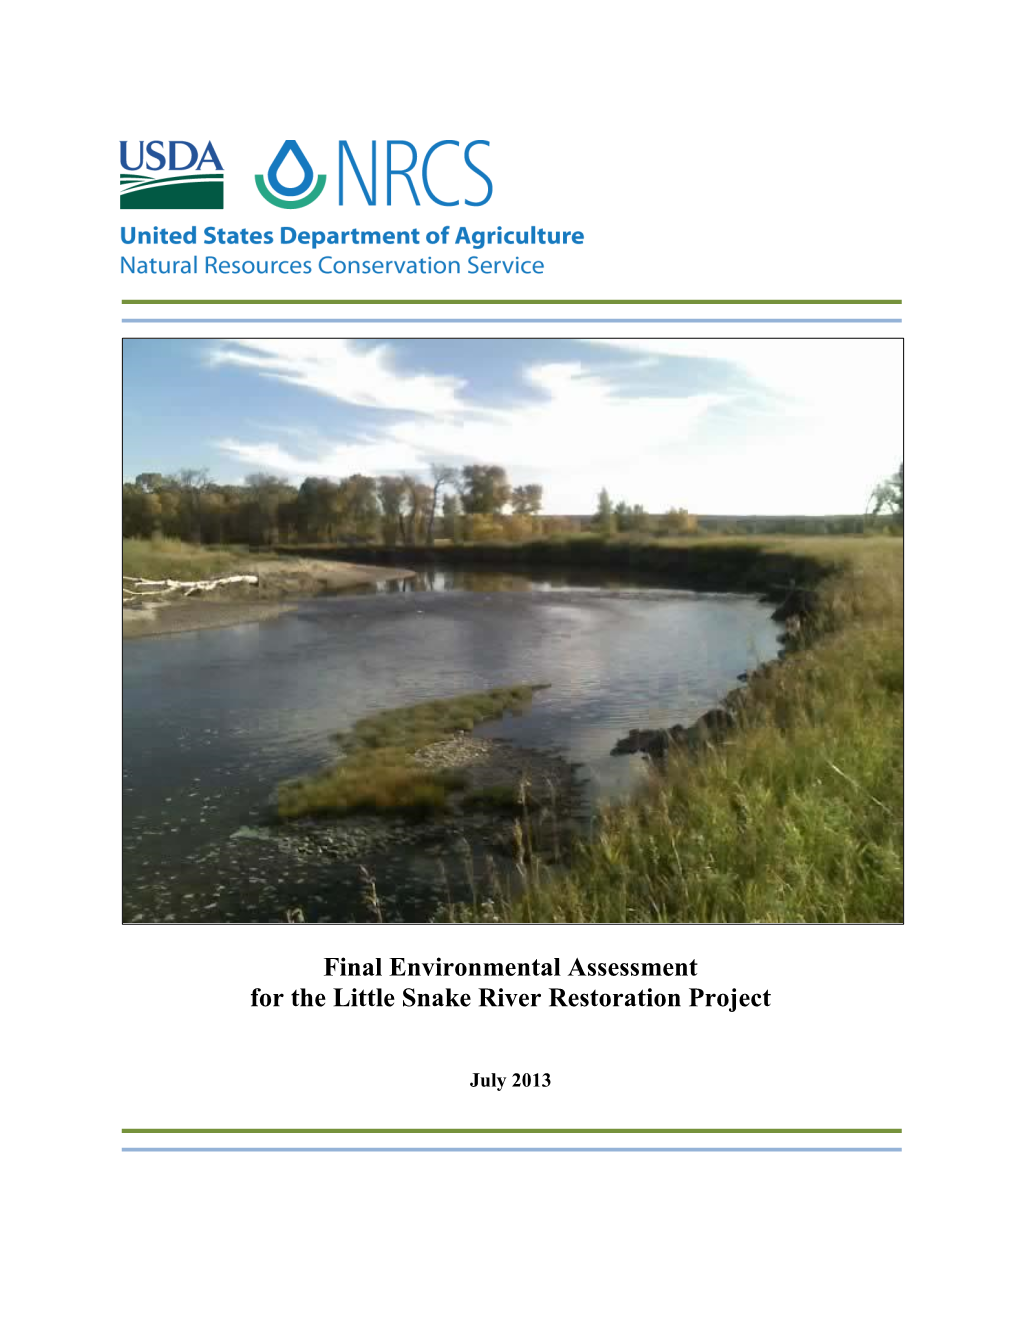 Final Environmental Assessment for the Little Snake River Restoration Project